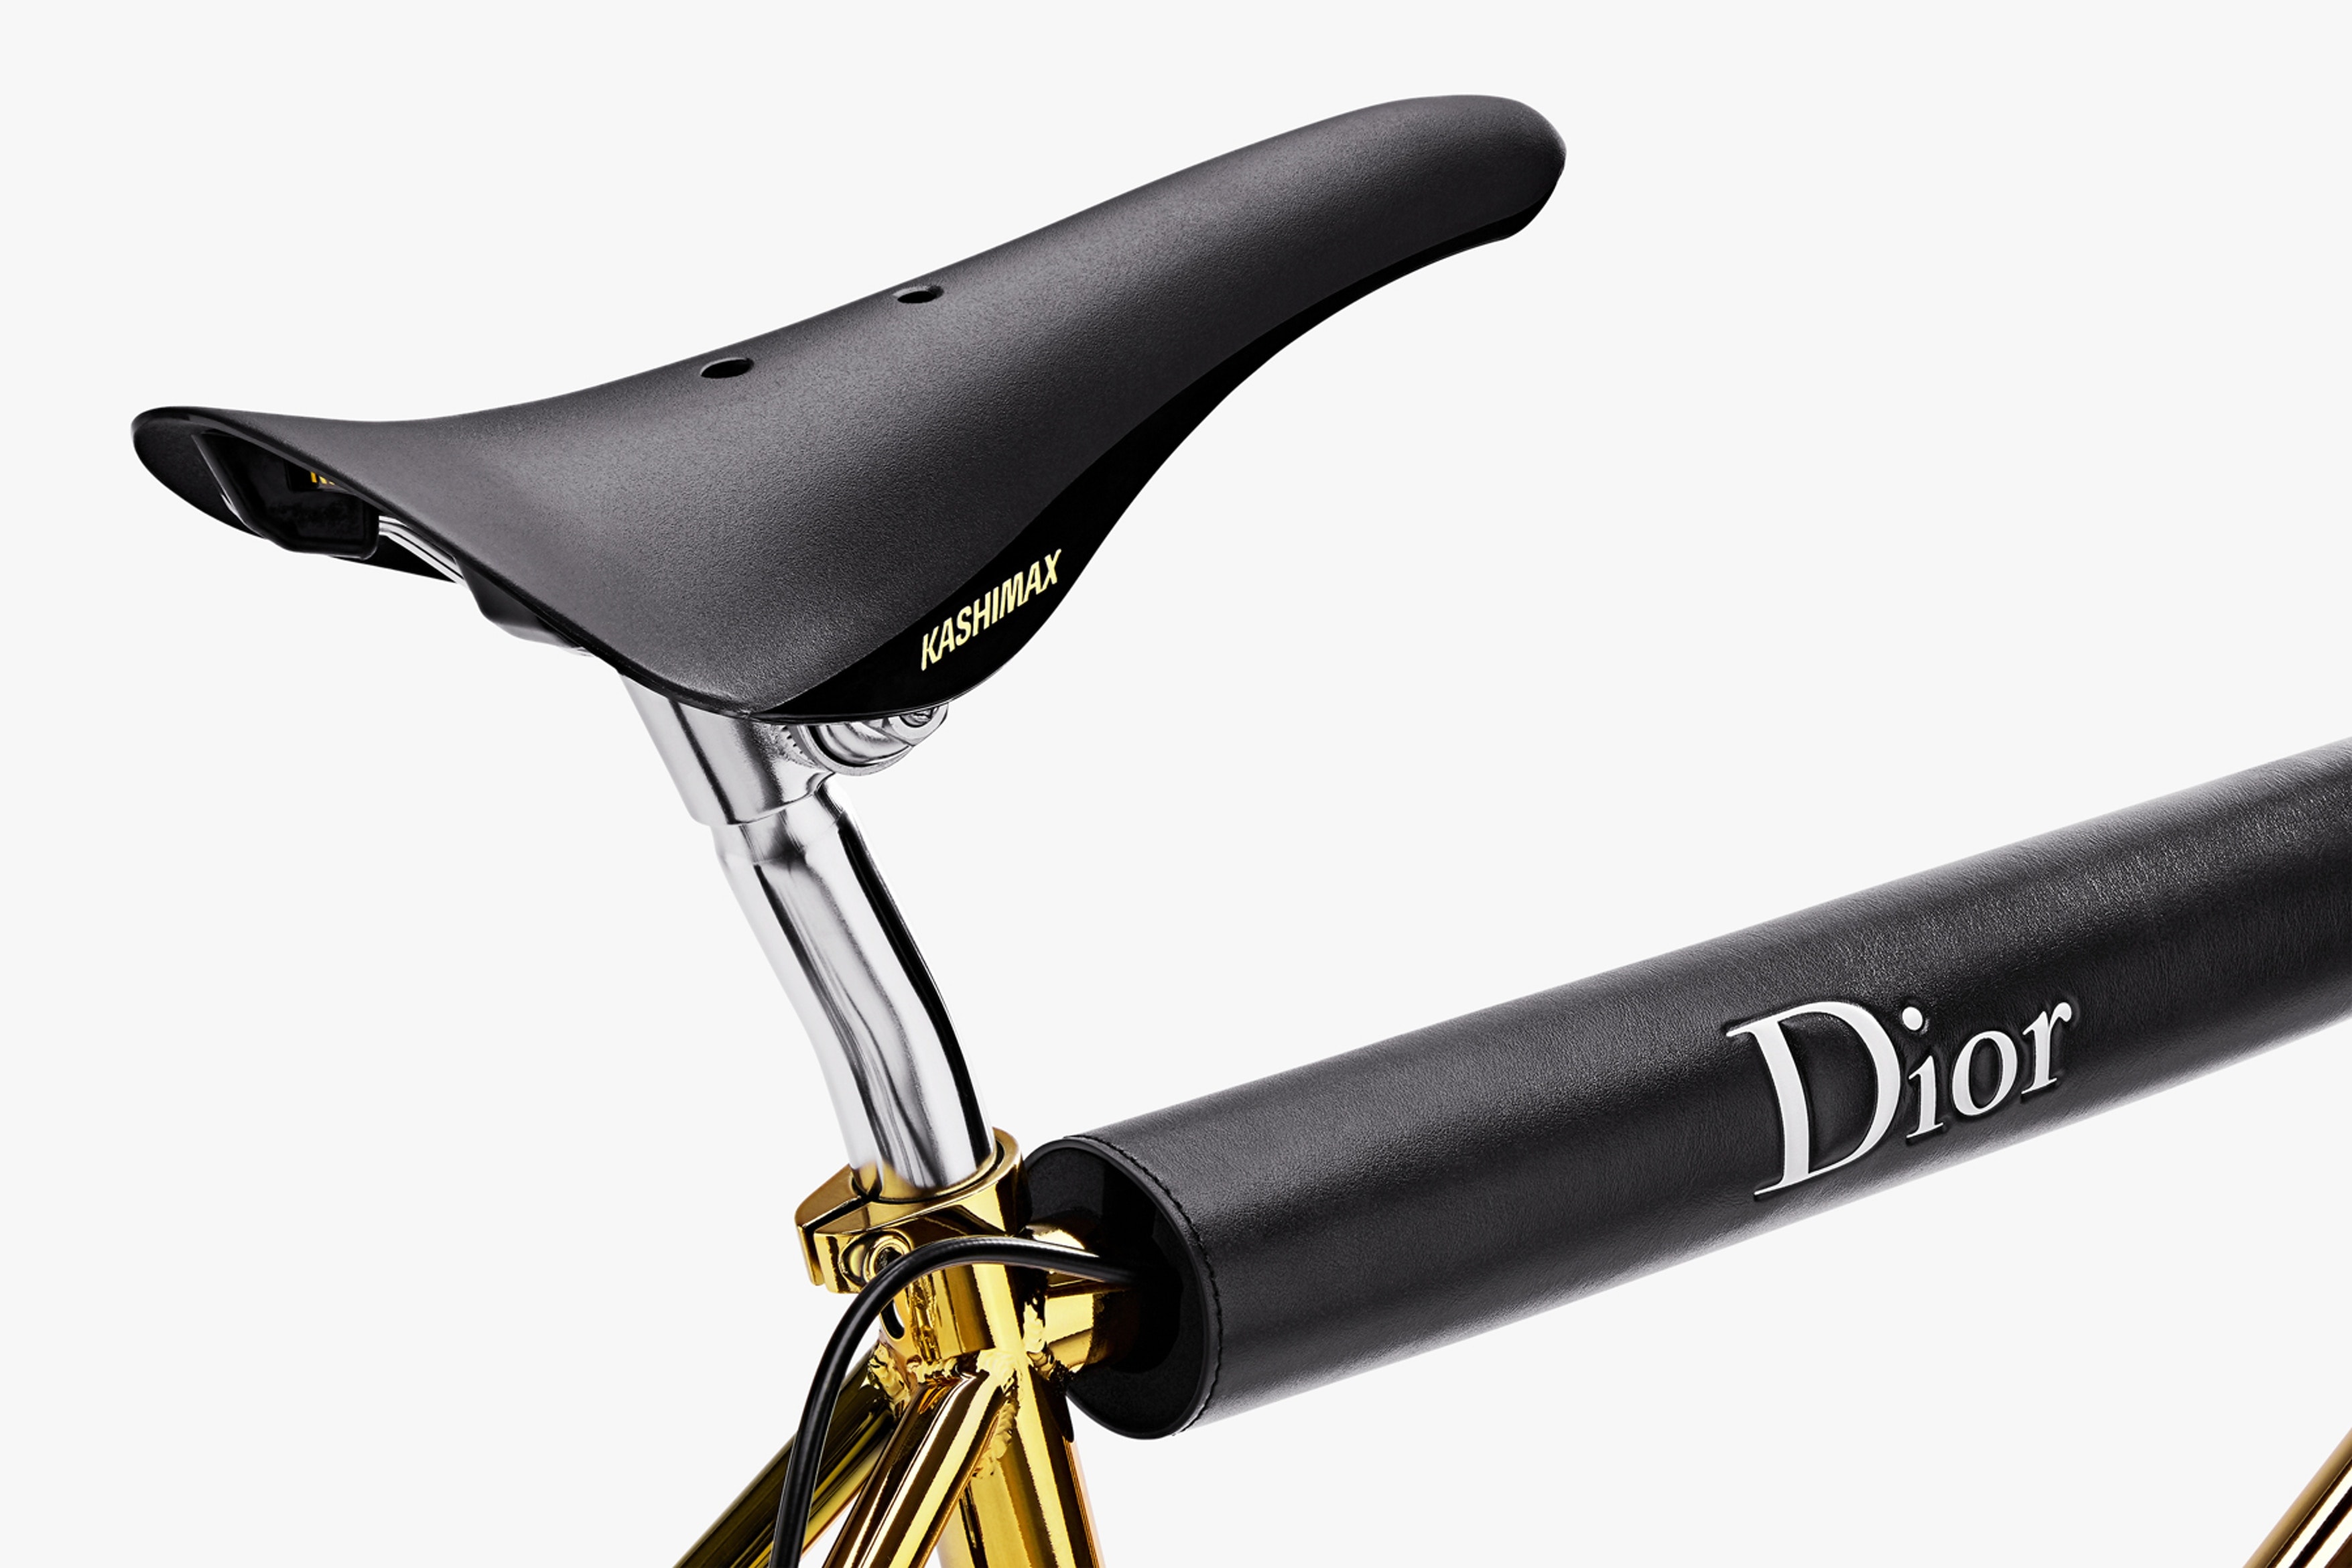 Dior 攜手 Bogarde 推出限量 100 部金色 BMX